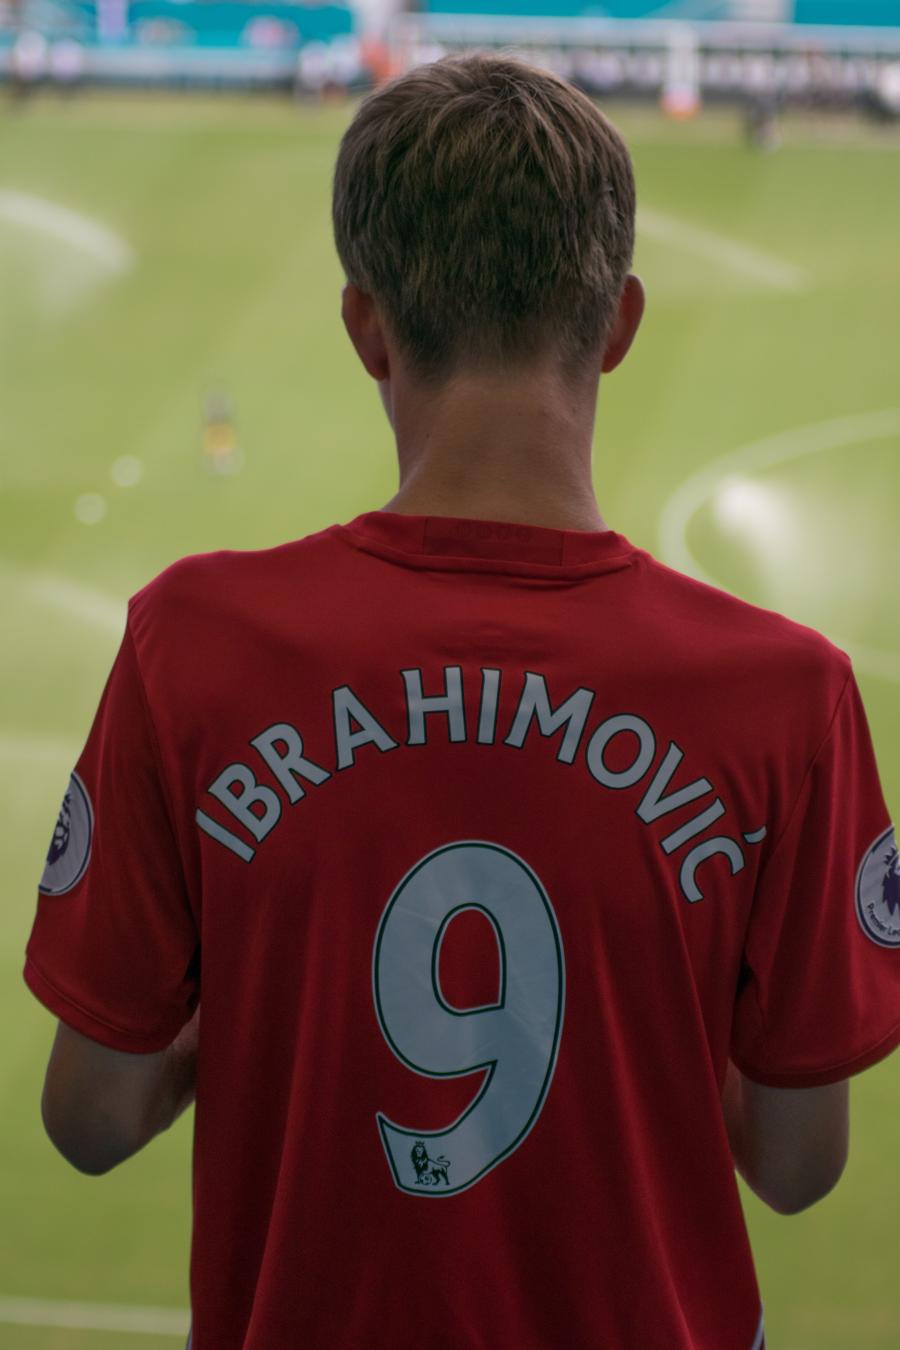 En person står med ryggen til iført en Manchester United hjemmetrøje med navnet "Ibrahimovic" påtrykt